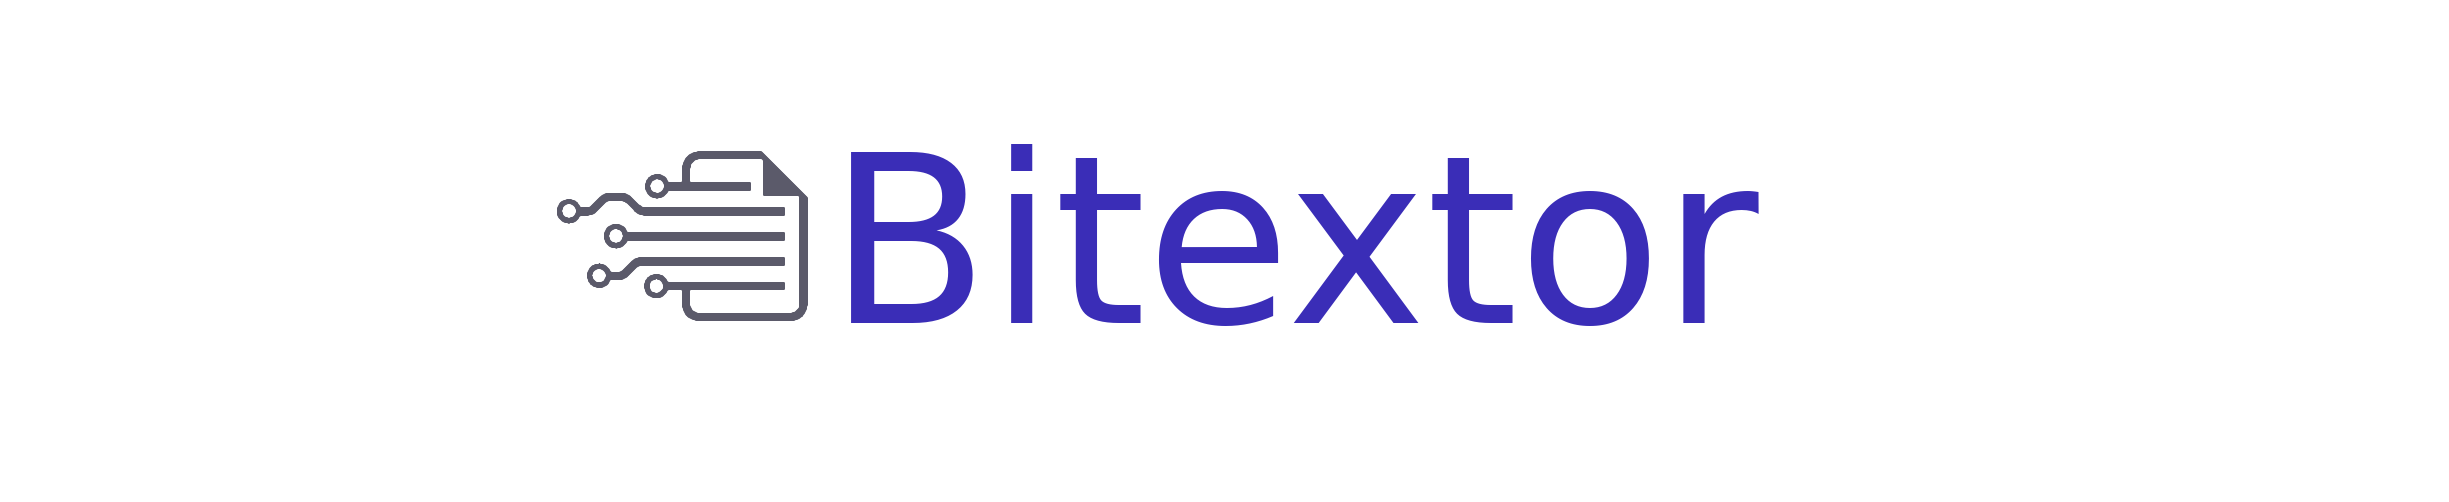 Bitextor